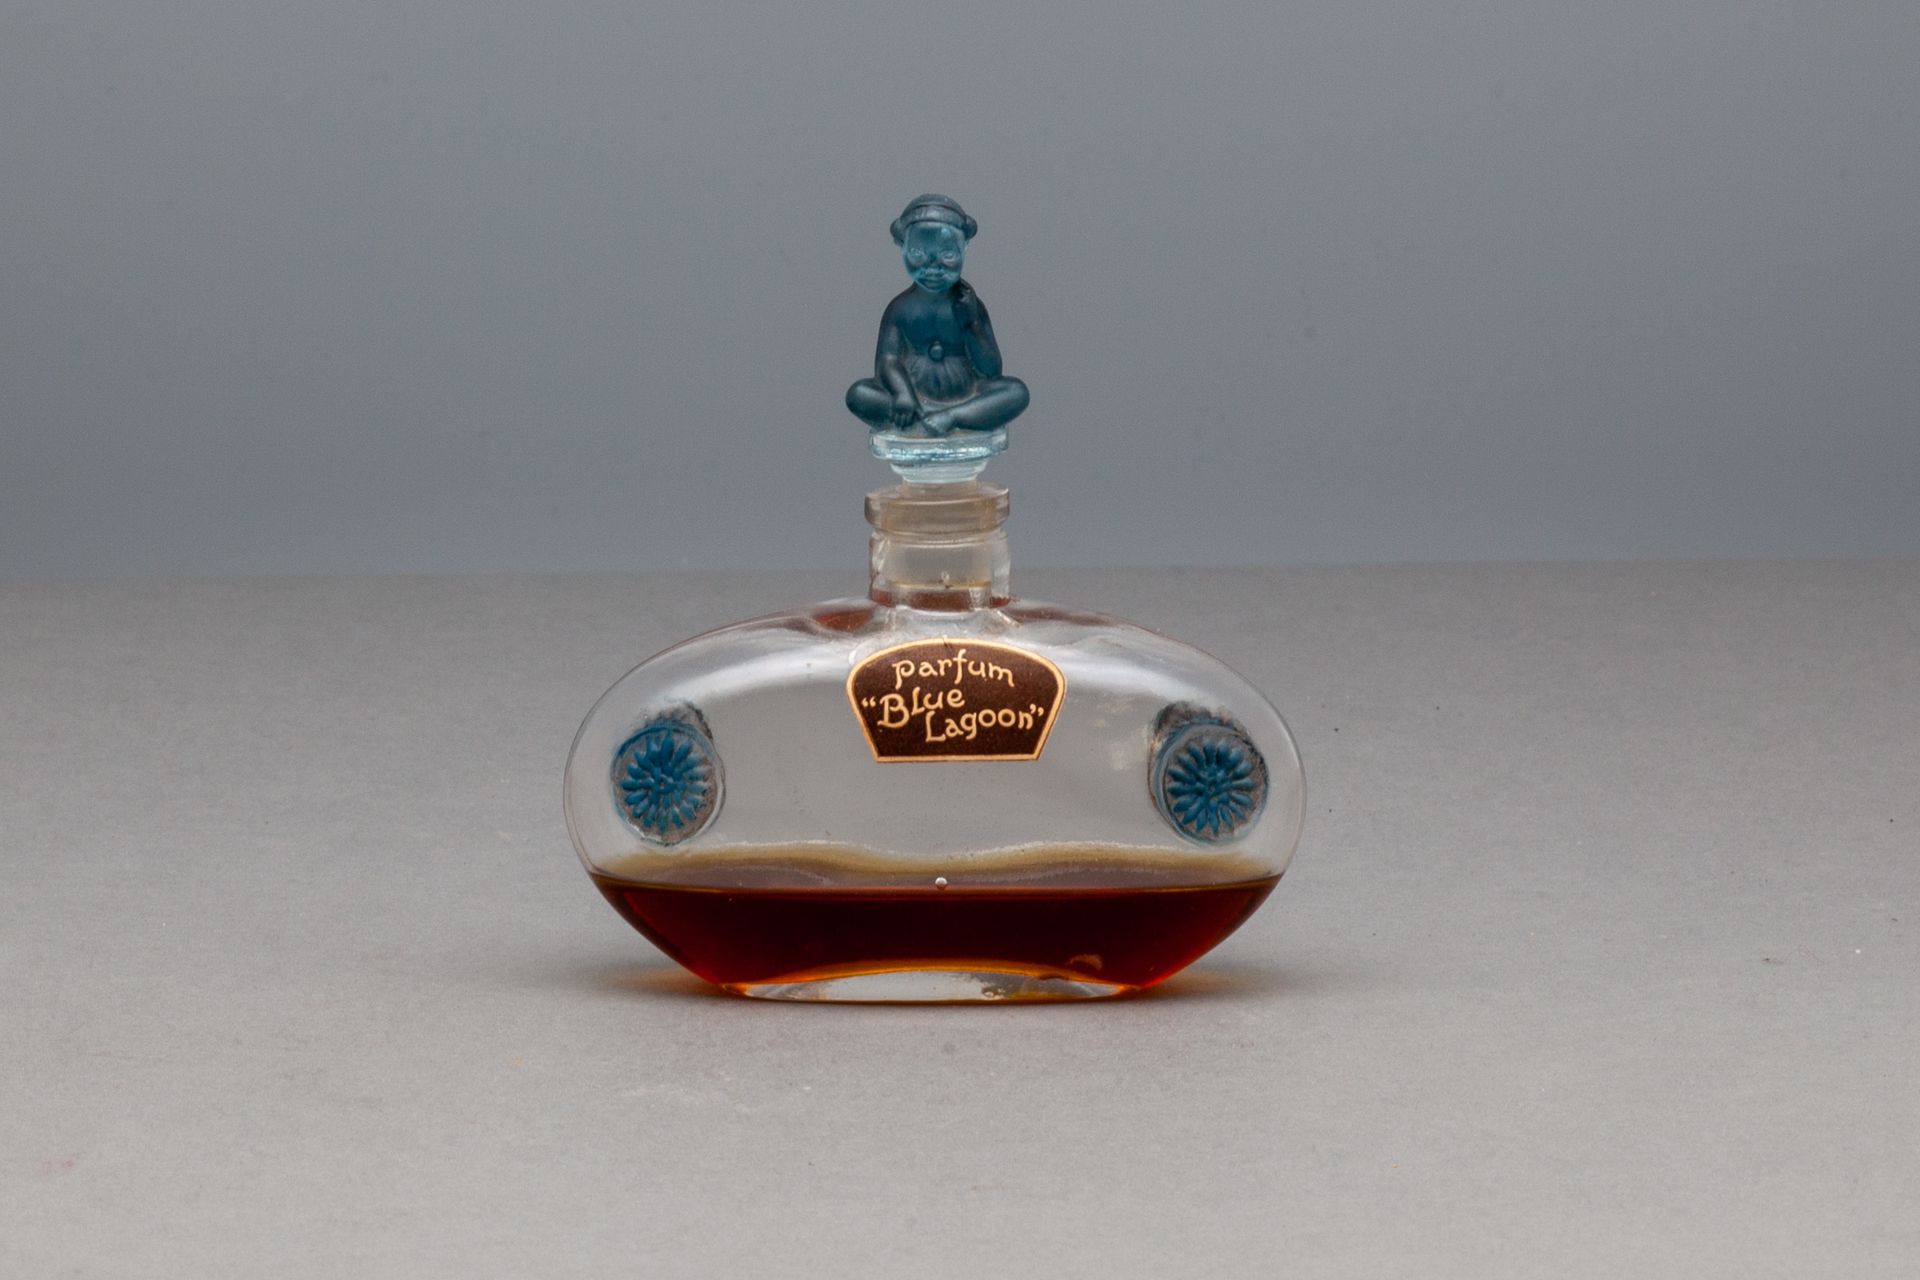 DEPINOIX- DUBARRY "BLUE LAGOON" 玻璃瓶，装饰有四个圆形的花饰。瓶塞代表一尊坐着的佛。高9.5厘米